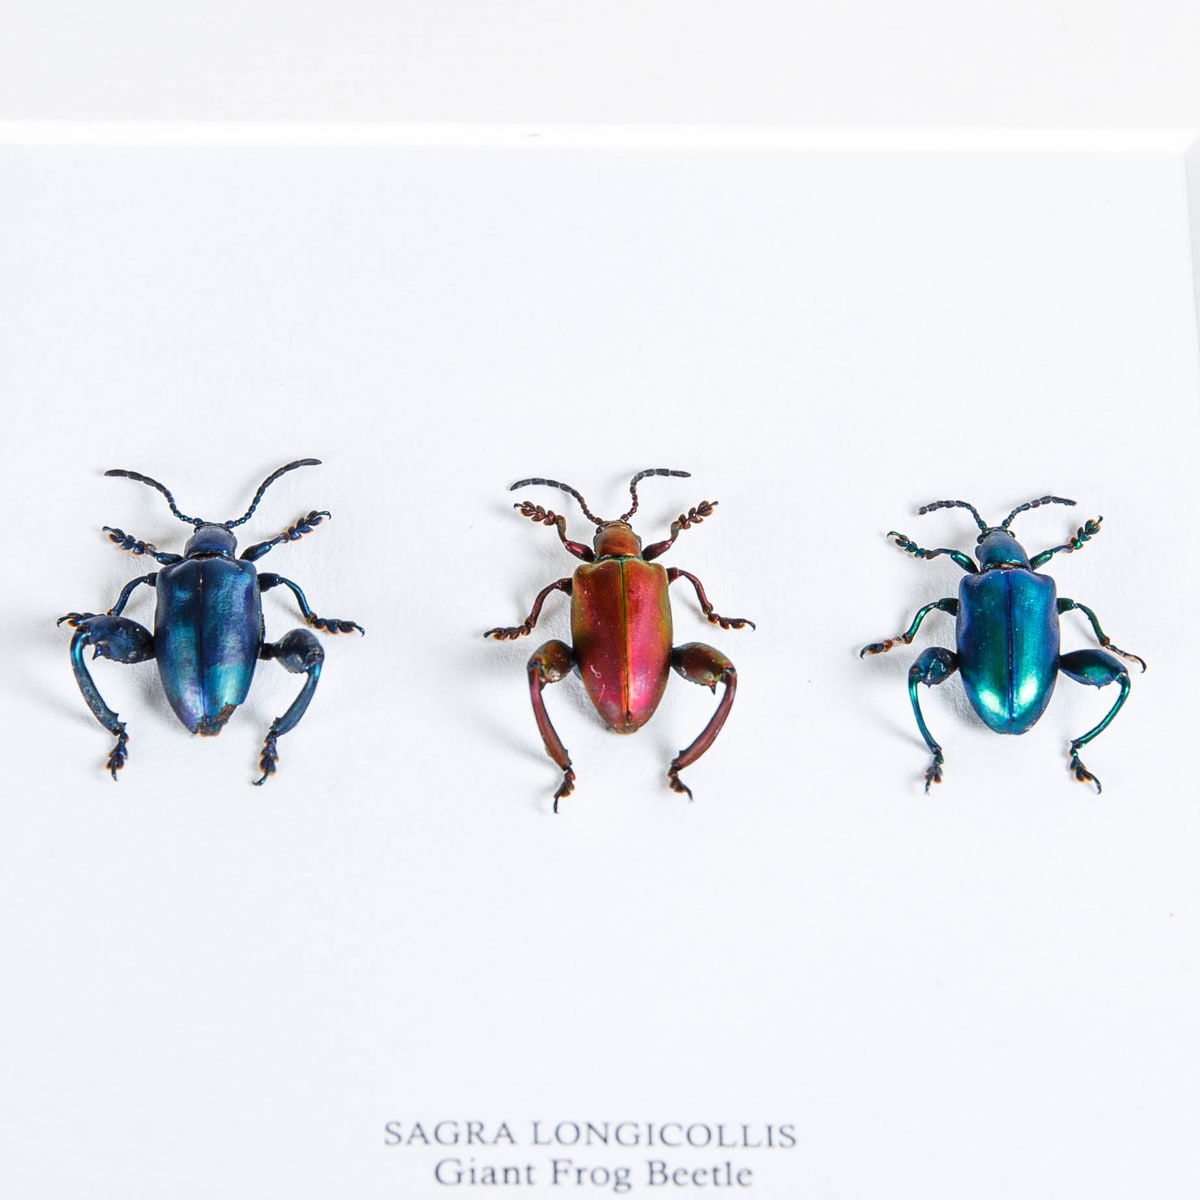 Giant Frog Beetle Trio in Box Frame (Sagra longicollis)